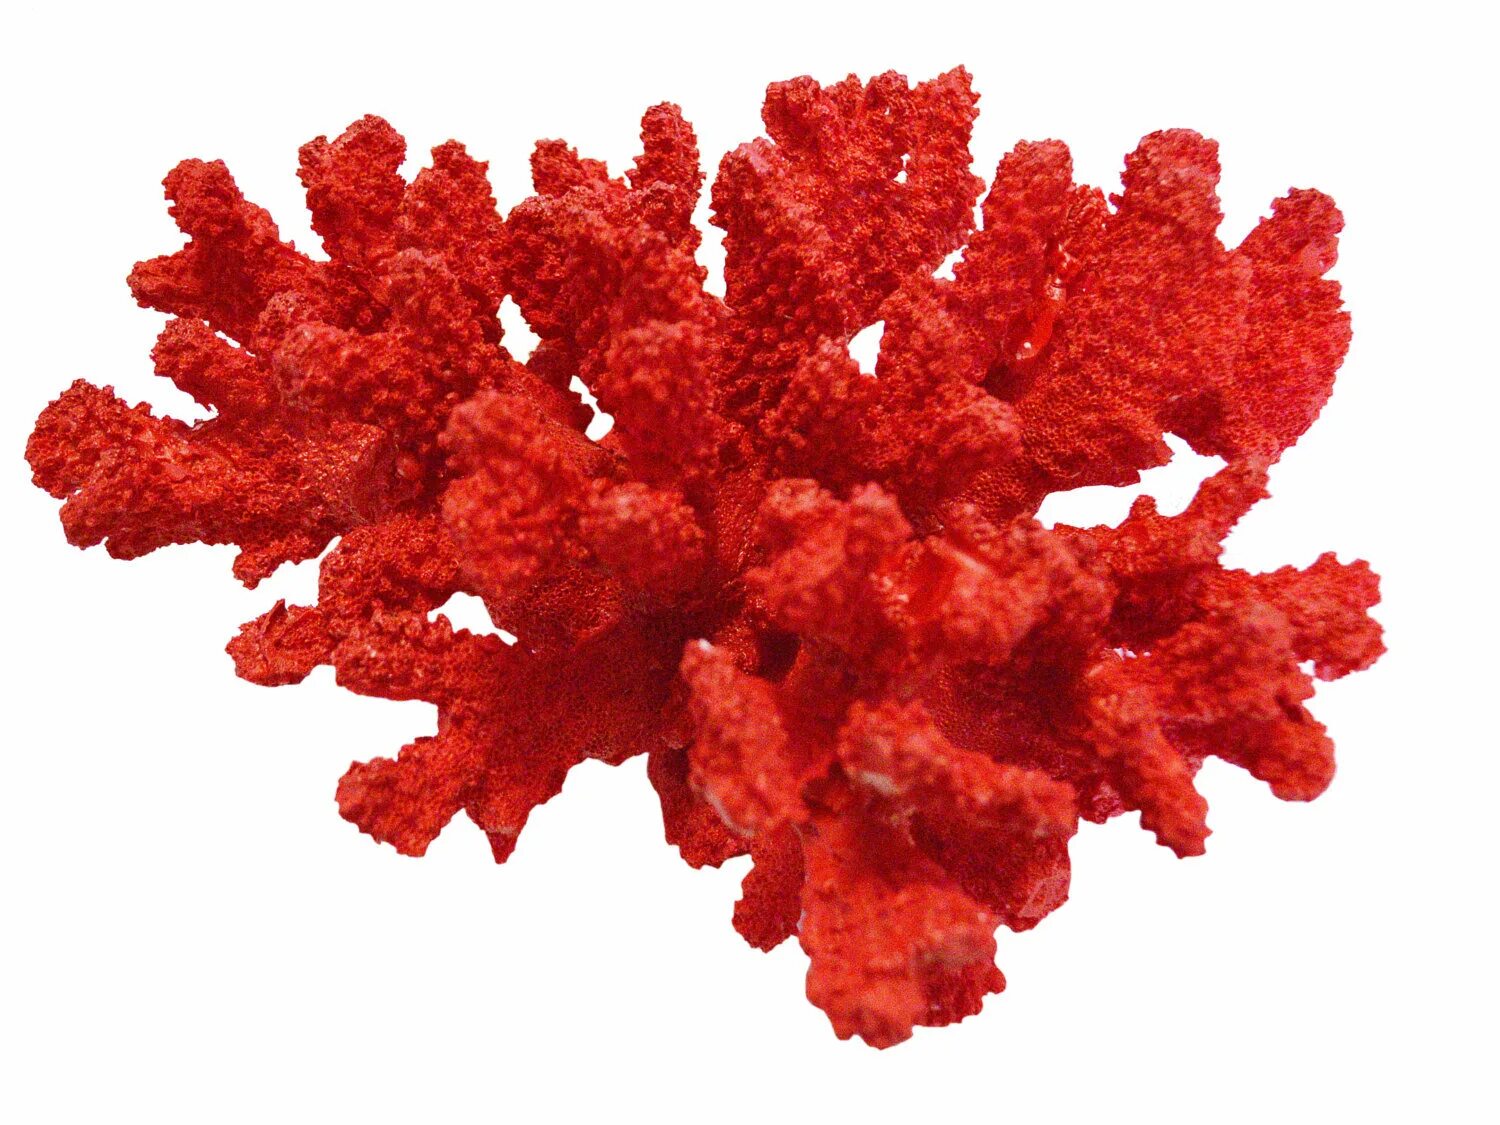 Red coral. Бангиевые водоросли. Литотамнион водоросли. Литотамния водоросль. Кораллы на белом фоне.